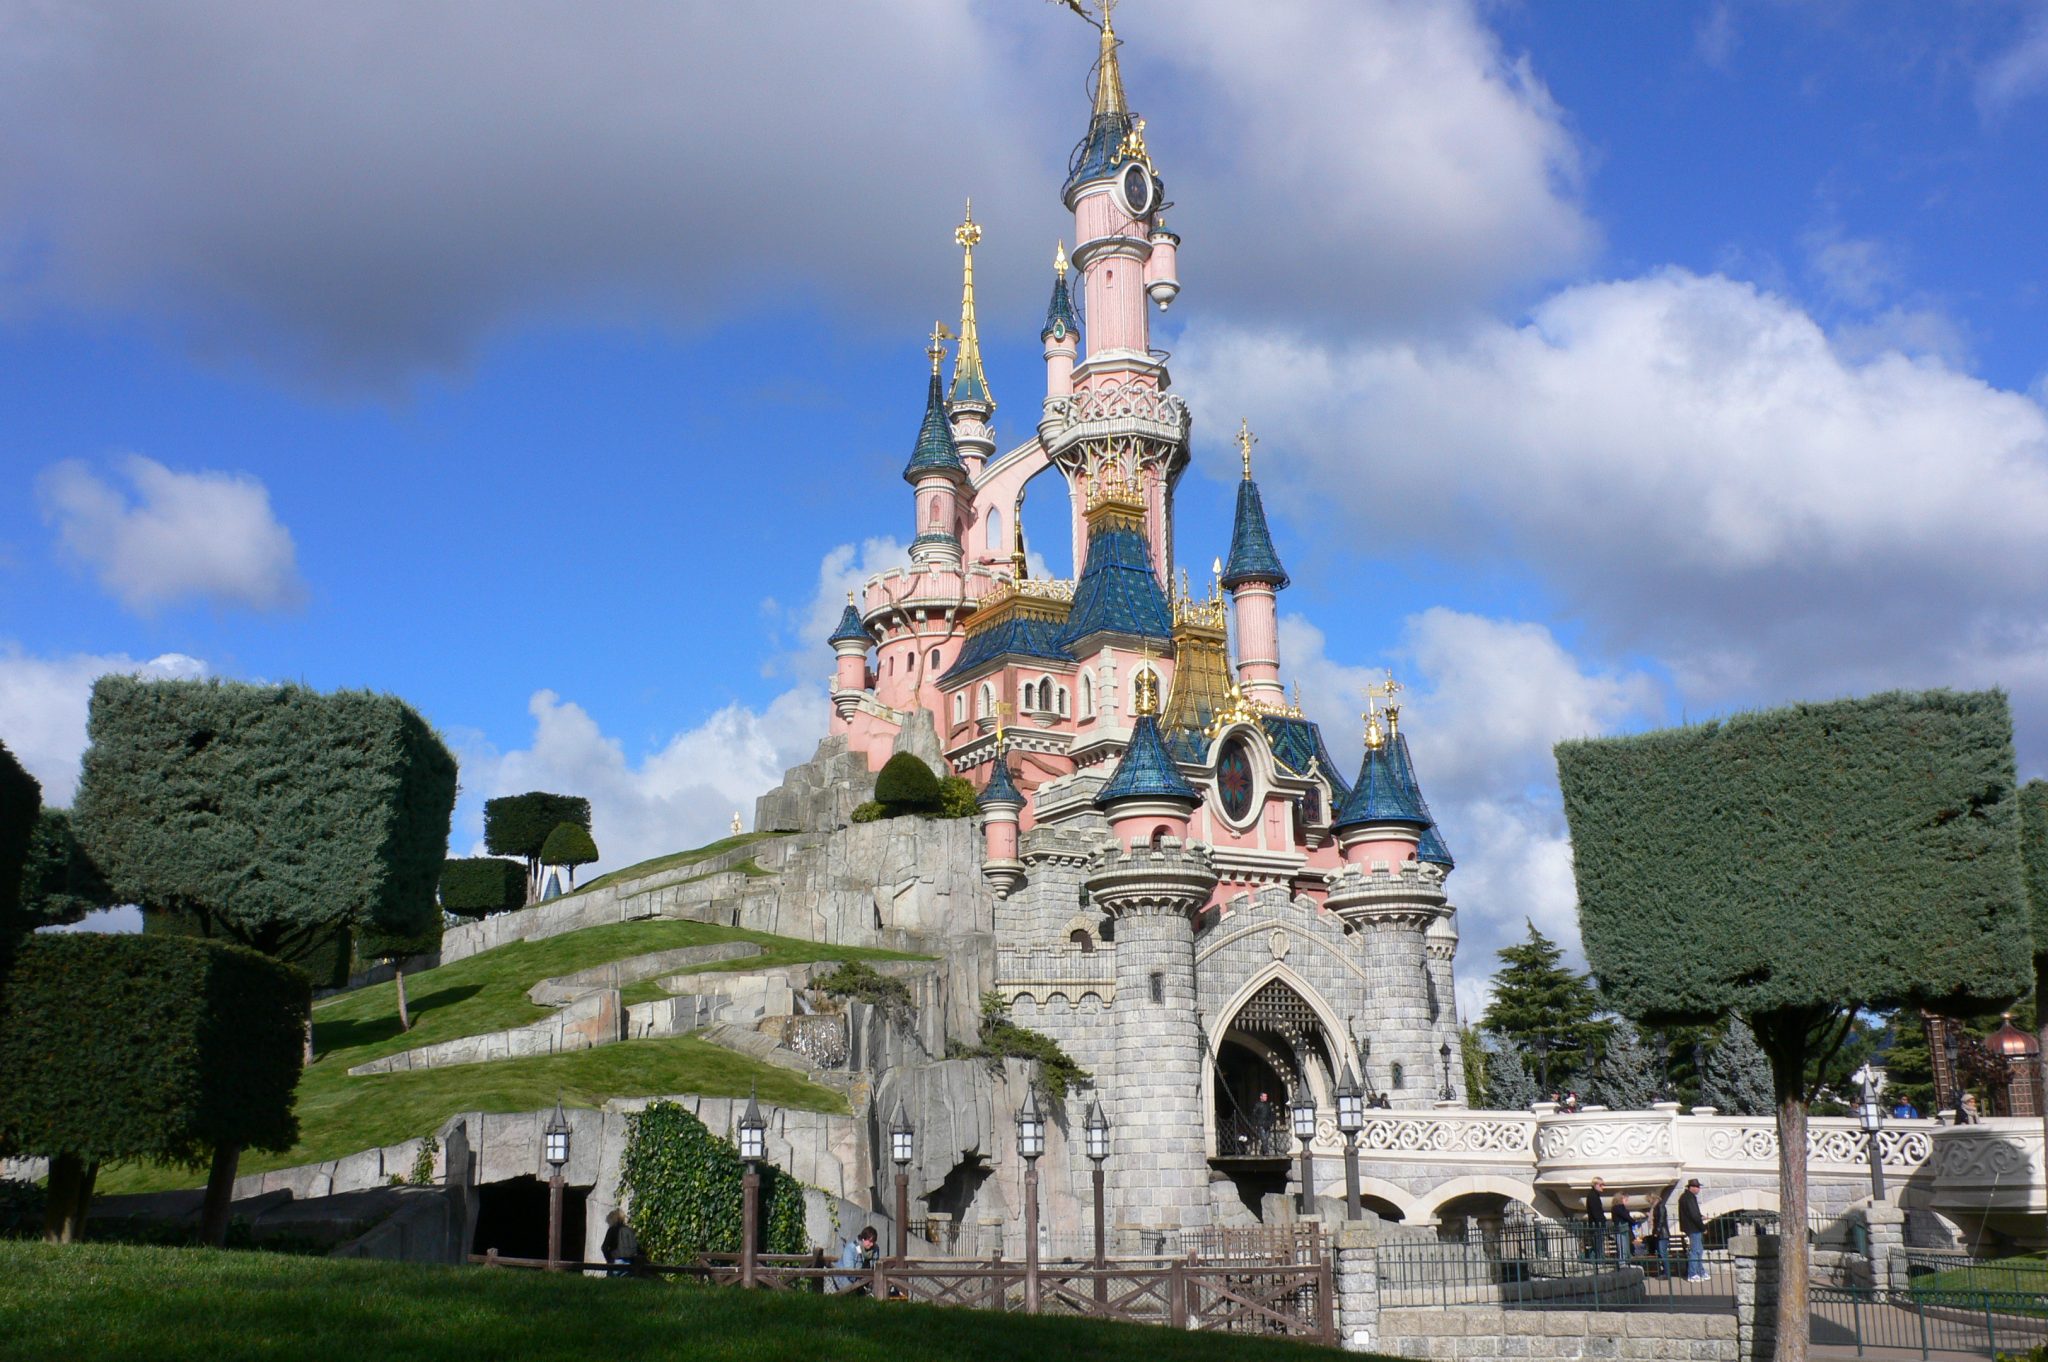 Disneyland Paris to Remain Closed Through November 17, 2015